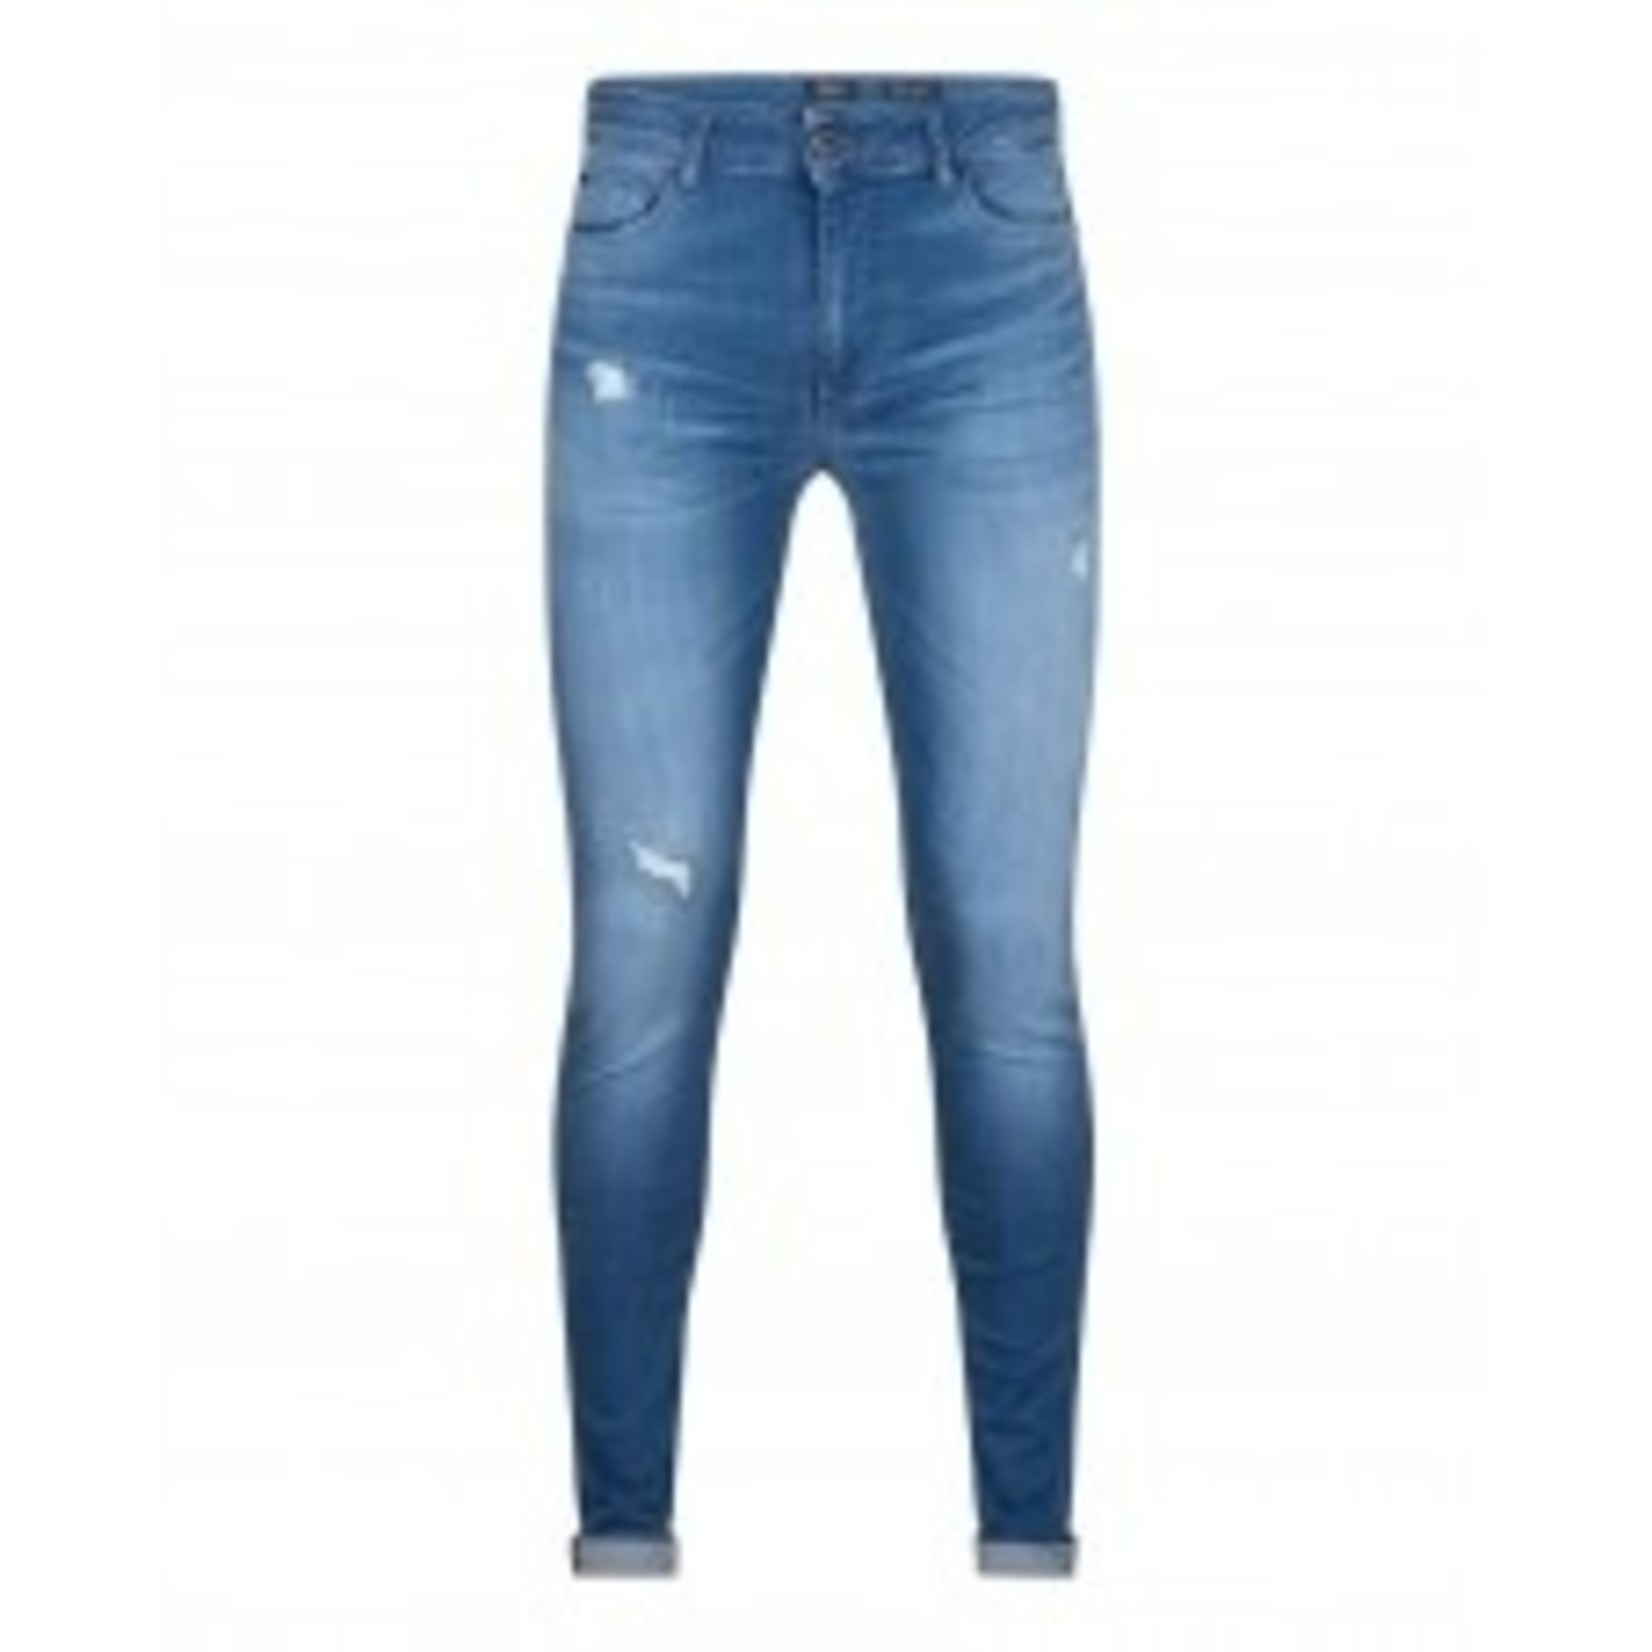 Rellix RLX-7-B2706 Xyan skinny jeans